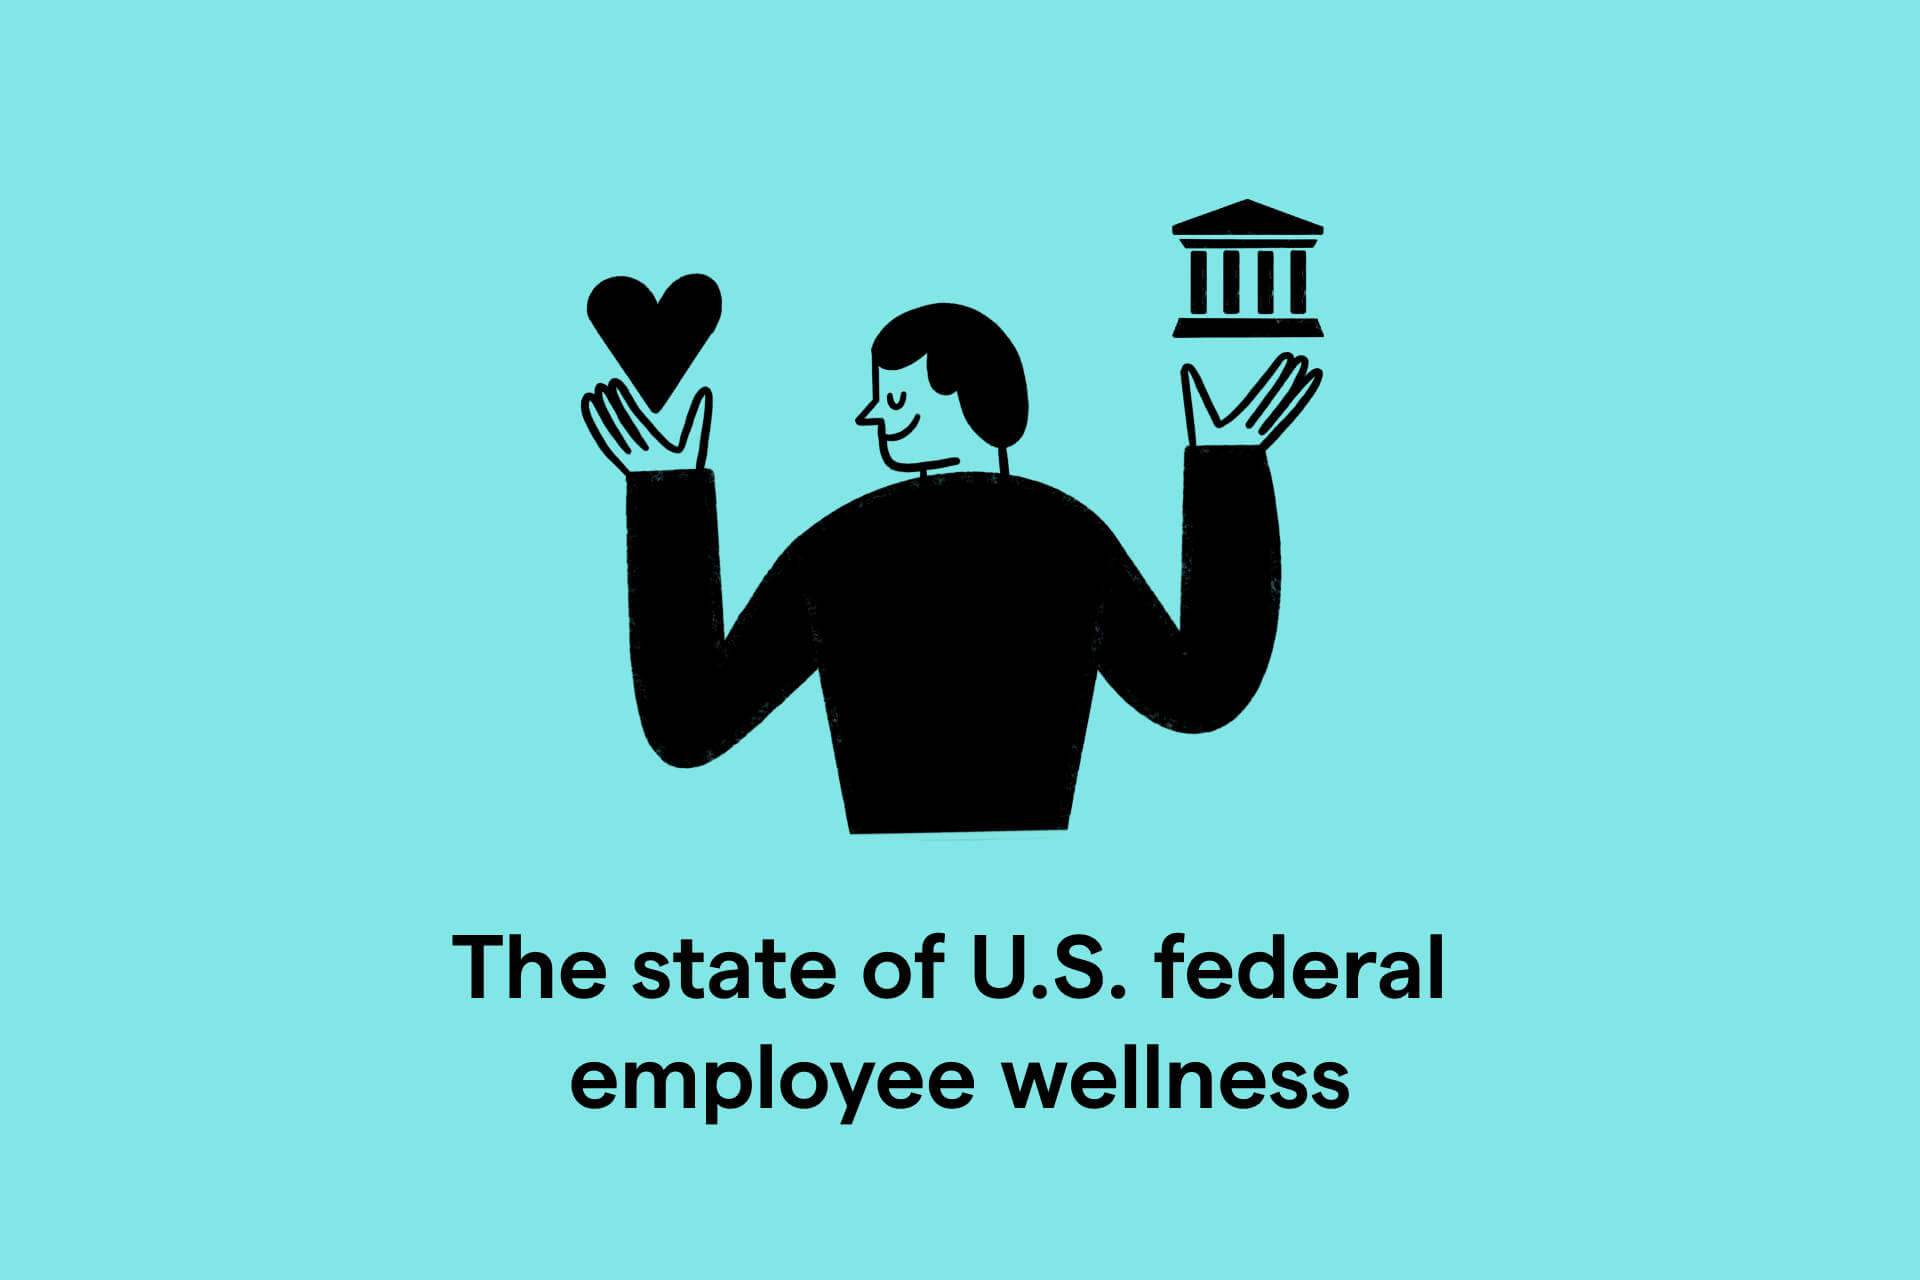 Mental fitness for U.S. federal employee wellness